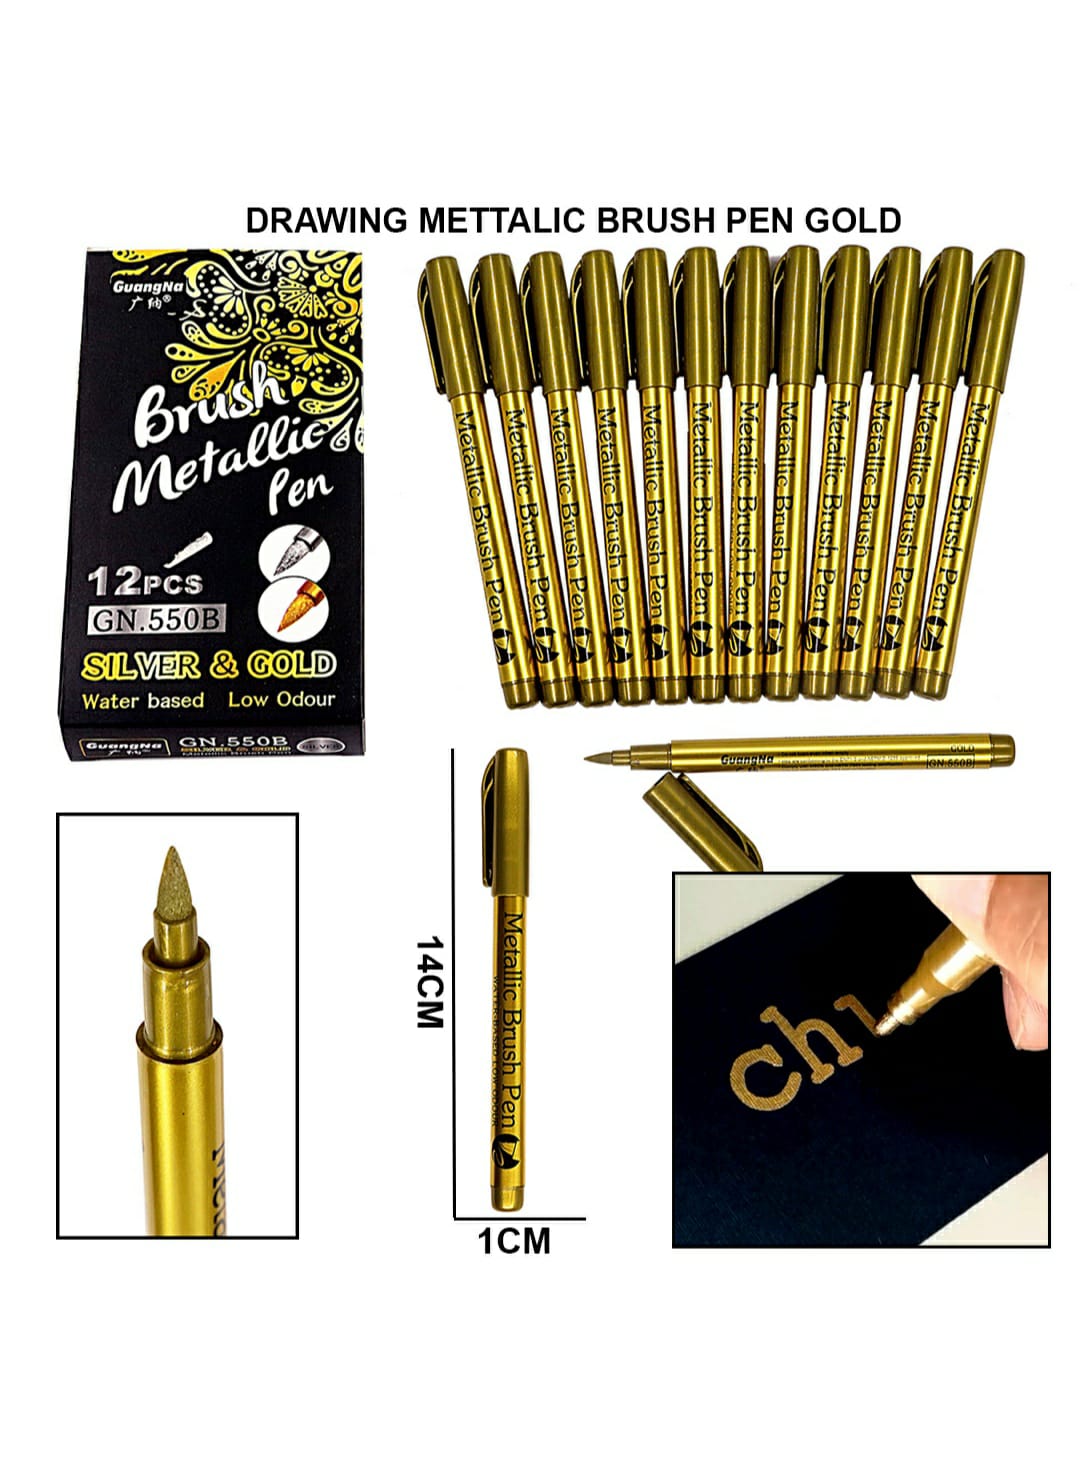 Mettalic Brush Pen Gold Gn550B-Gd | INKARTO